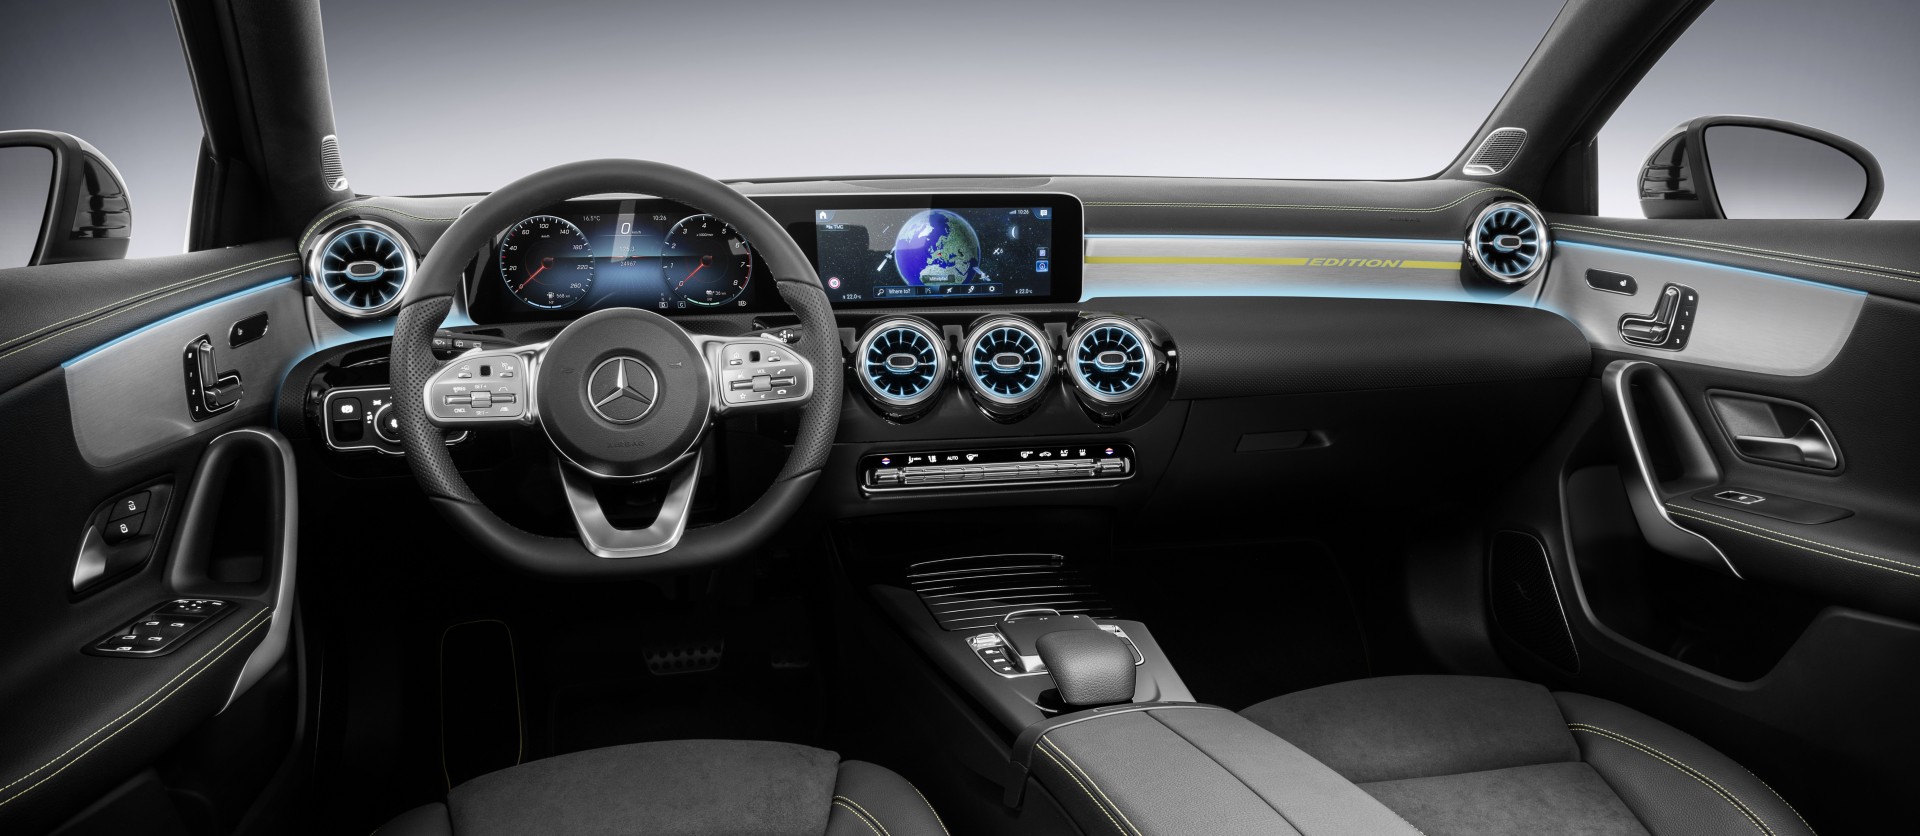 Tudo sobre: O interior do novo Mercedes-Benz Classe A